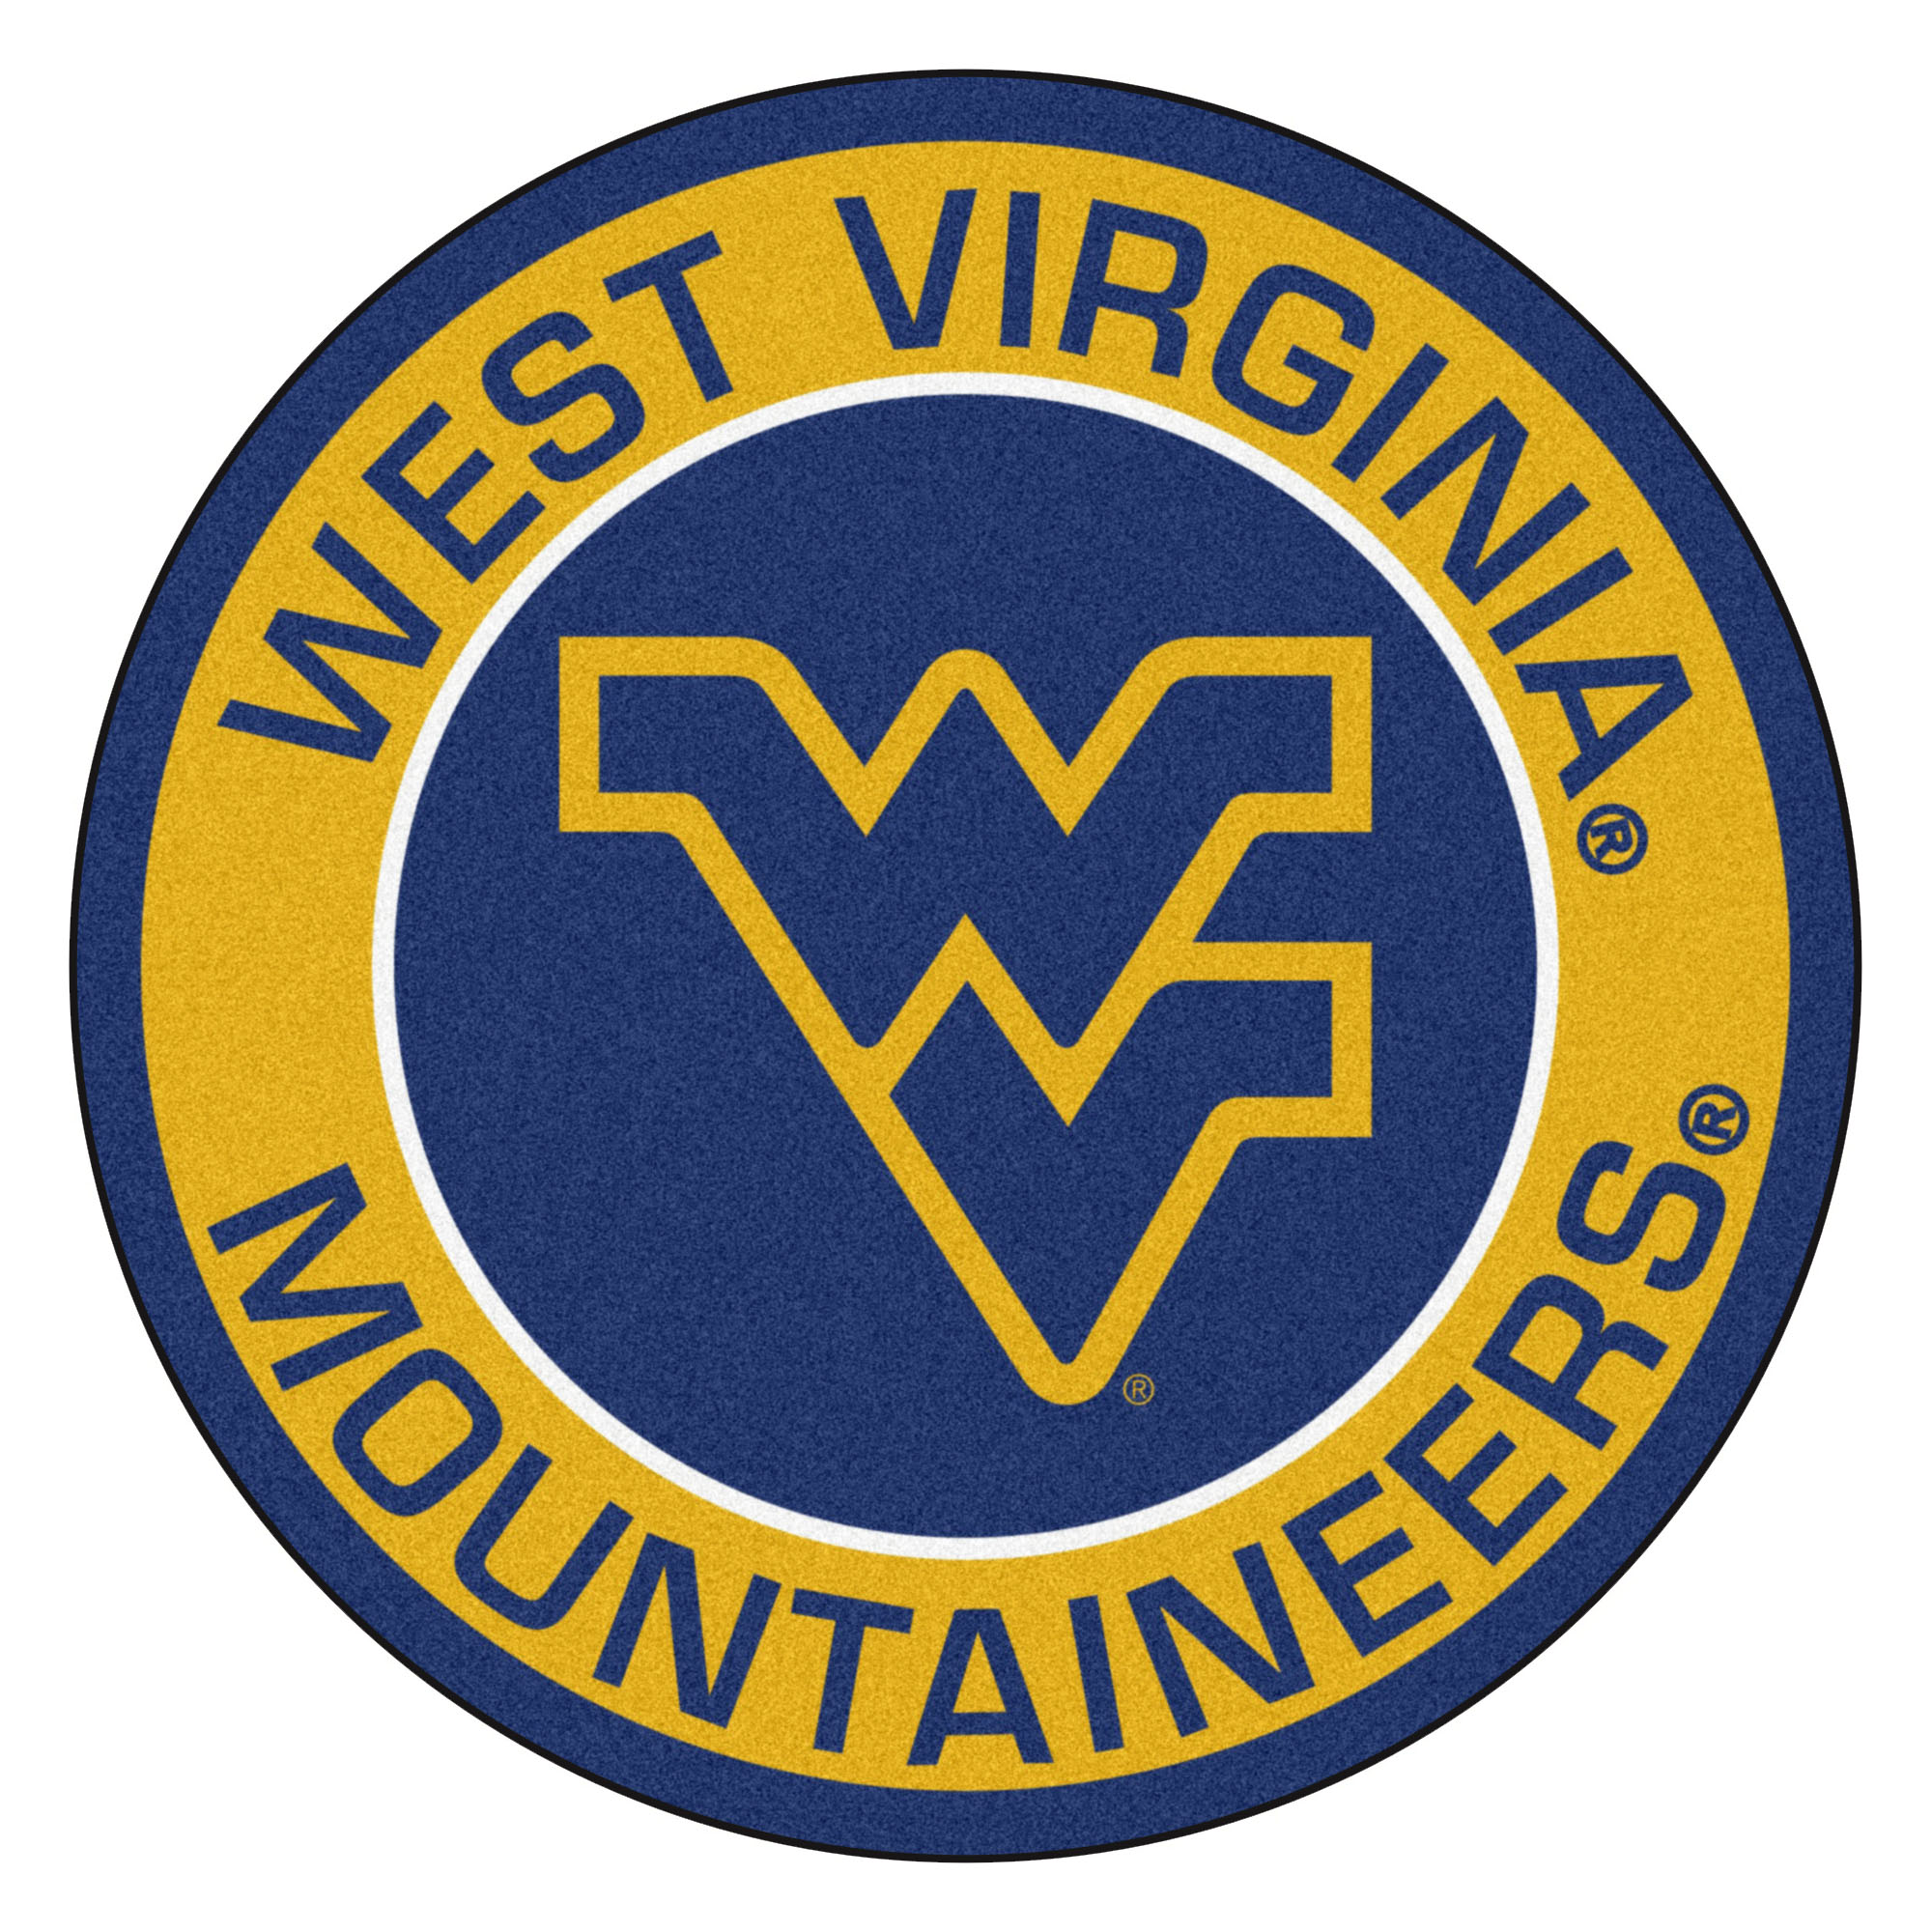 West Virginia Mountaineers Tickets